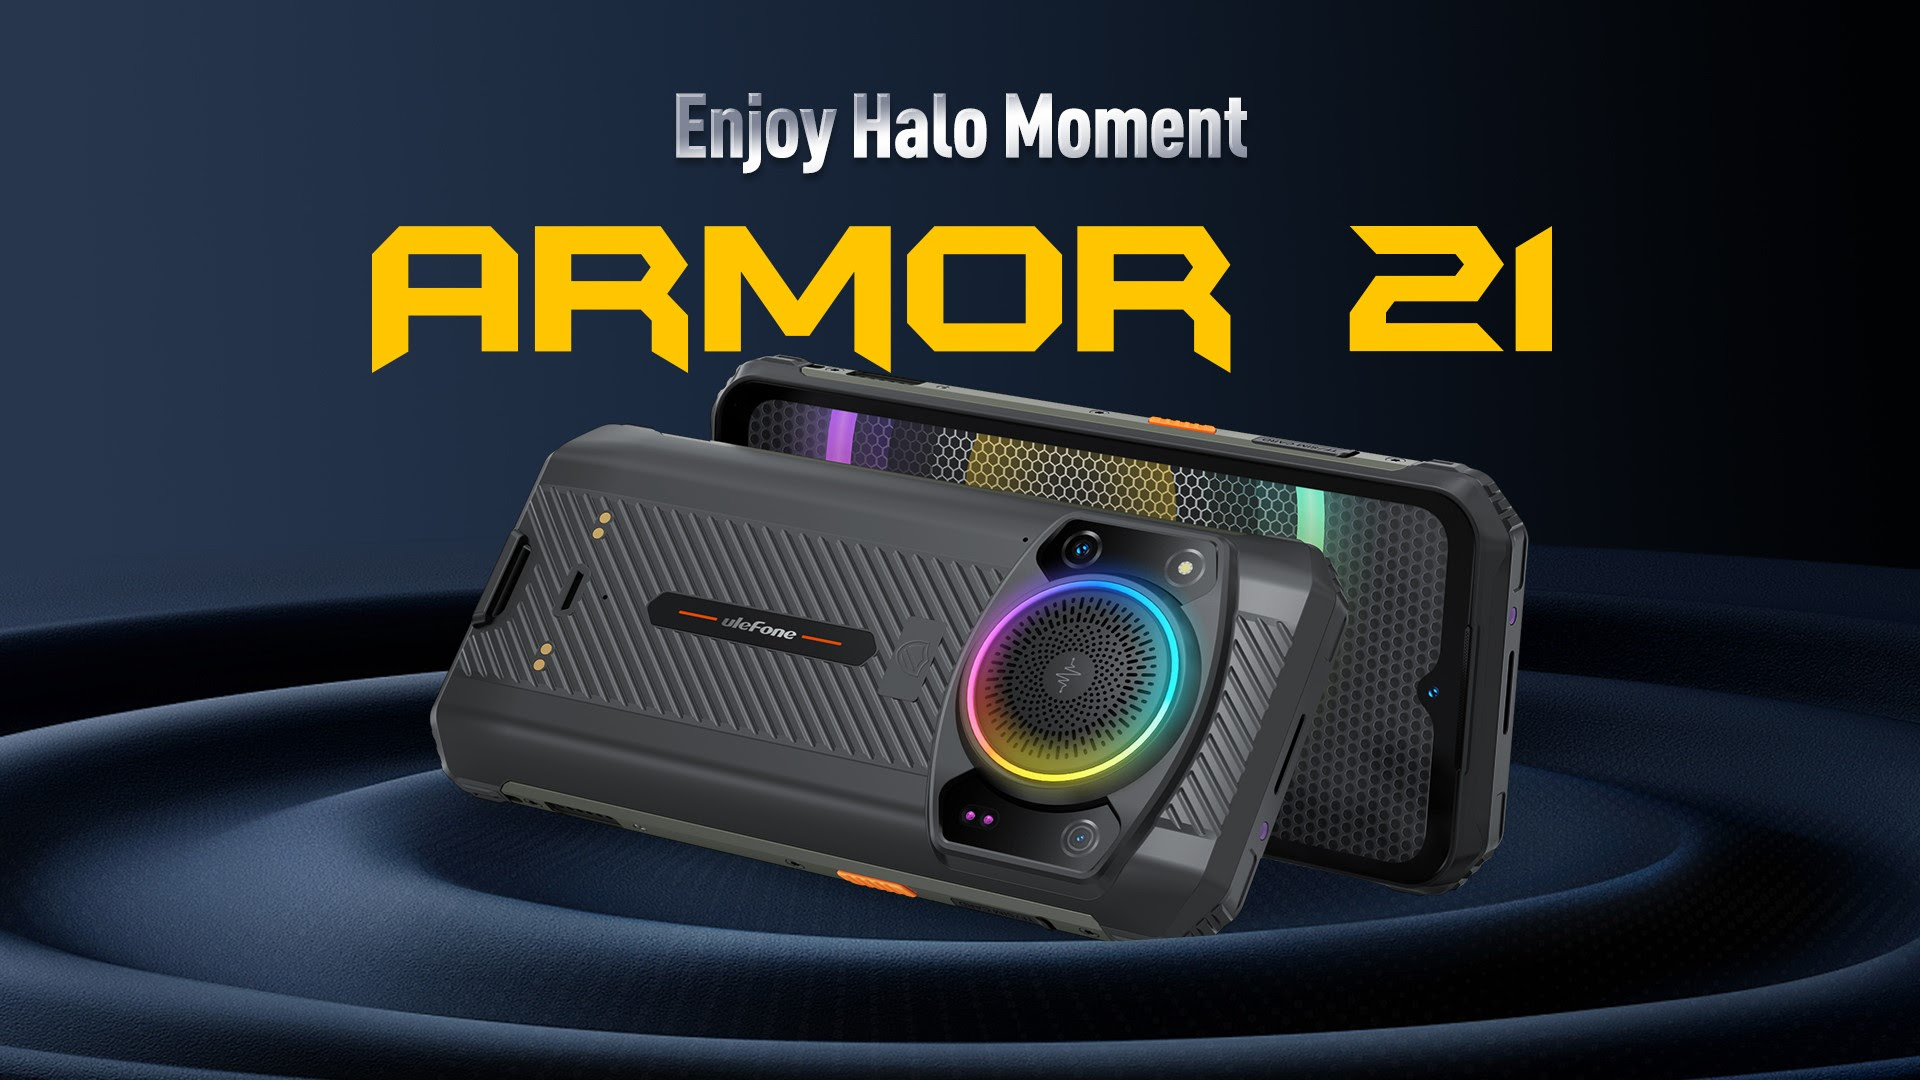 Ulefone Armor 21 coming soon with 'Infinite Halo